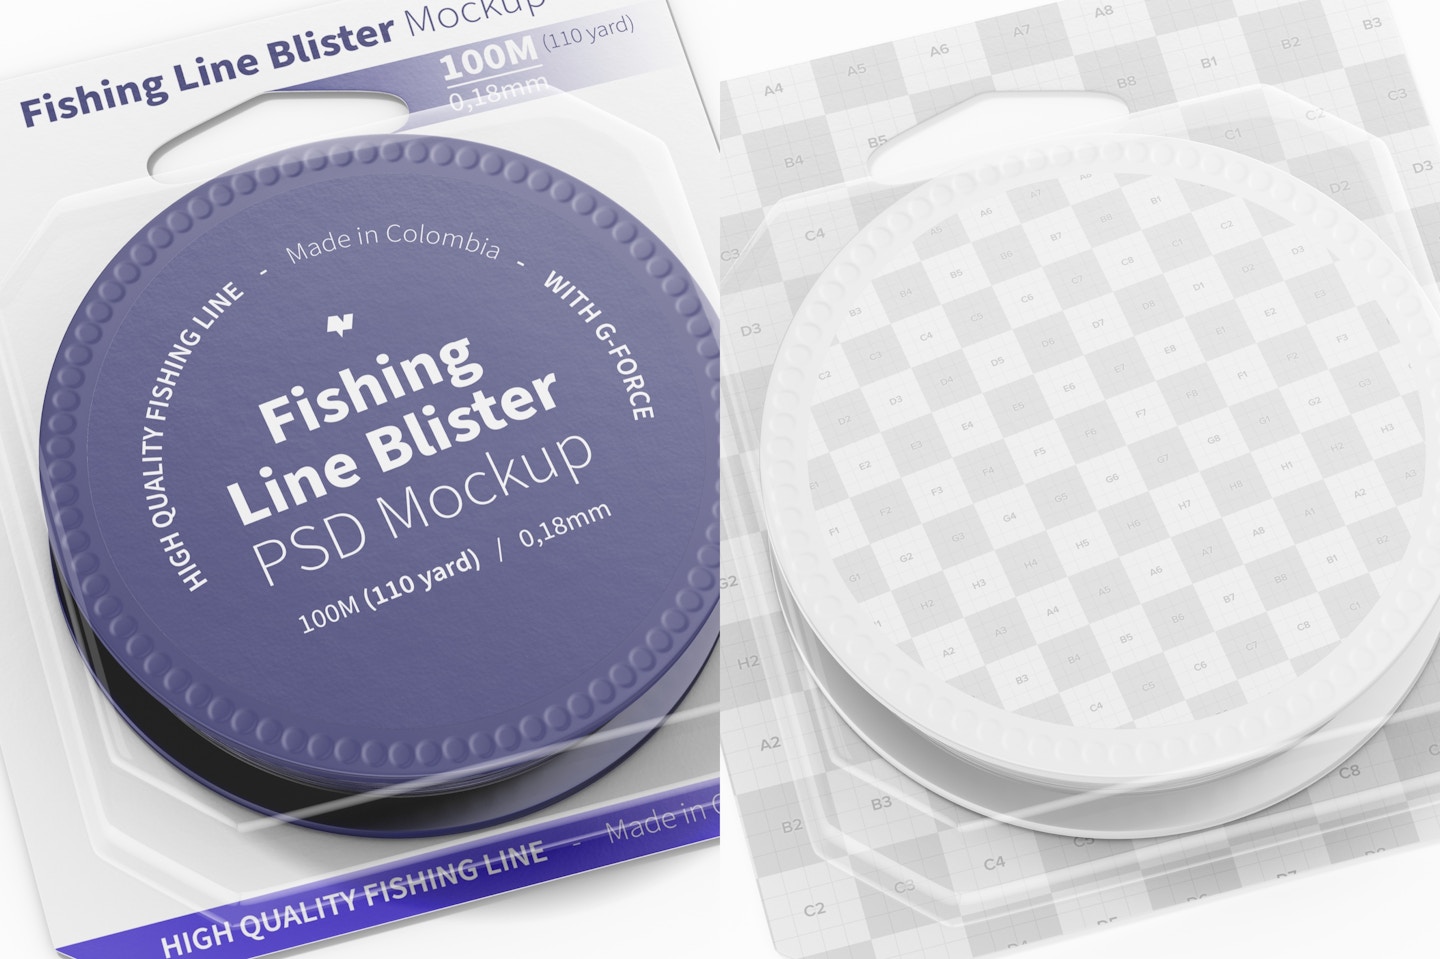 Fishing Line Blister Mockup, Close Up